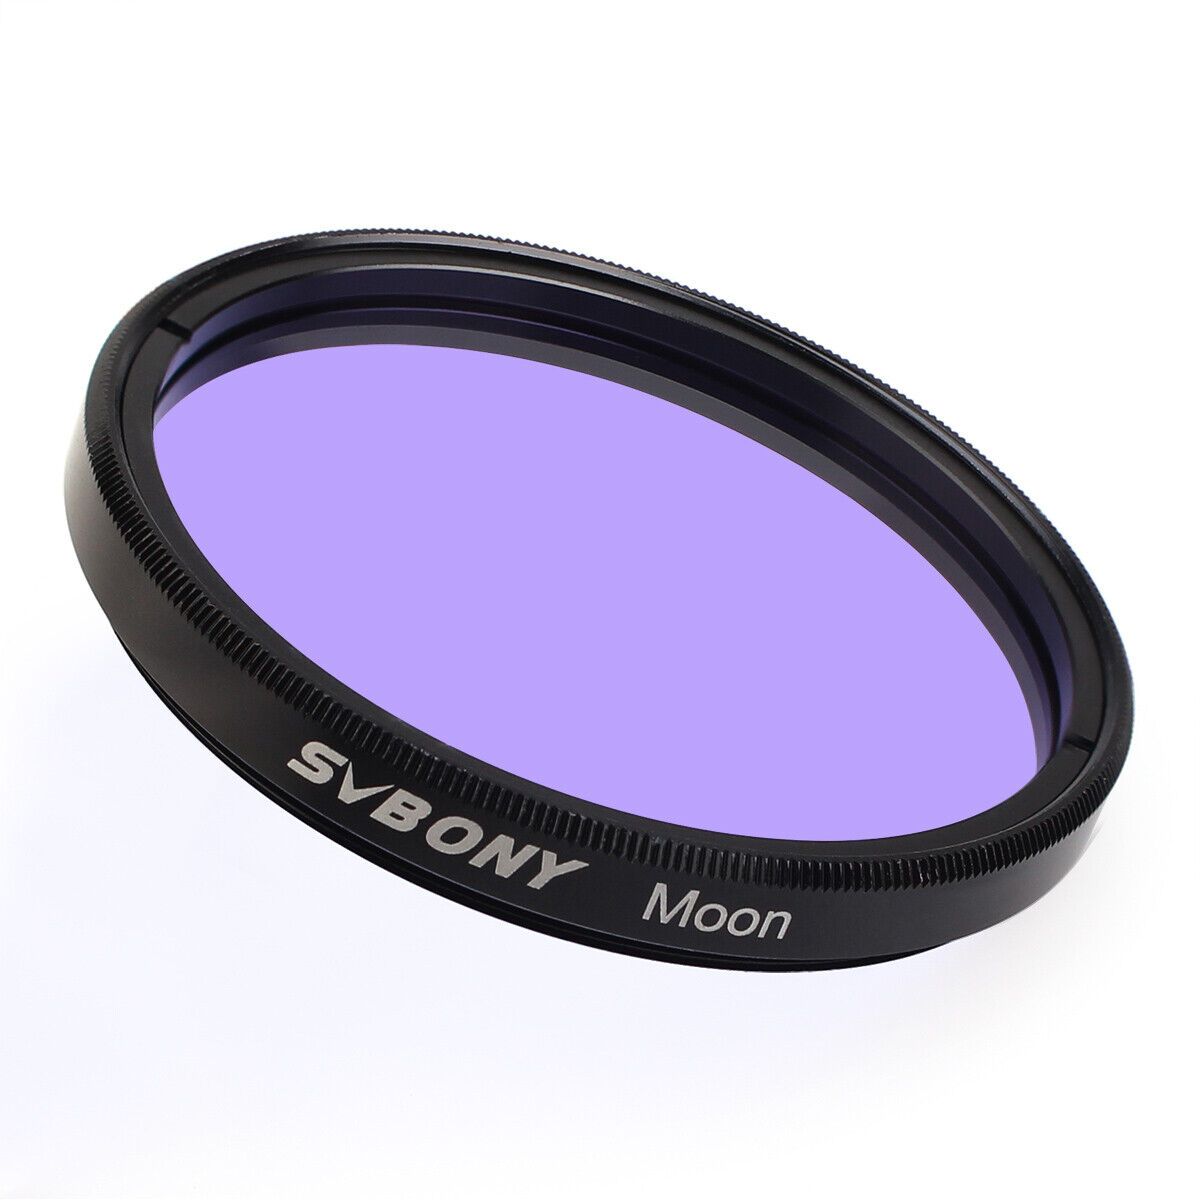 SVBONY 2inch Moon Filters Standard Filter Thread for Telescope Eyepiece Lenses